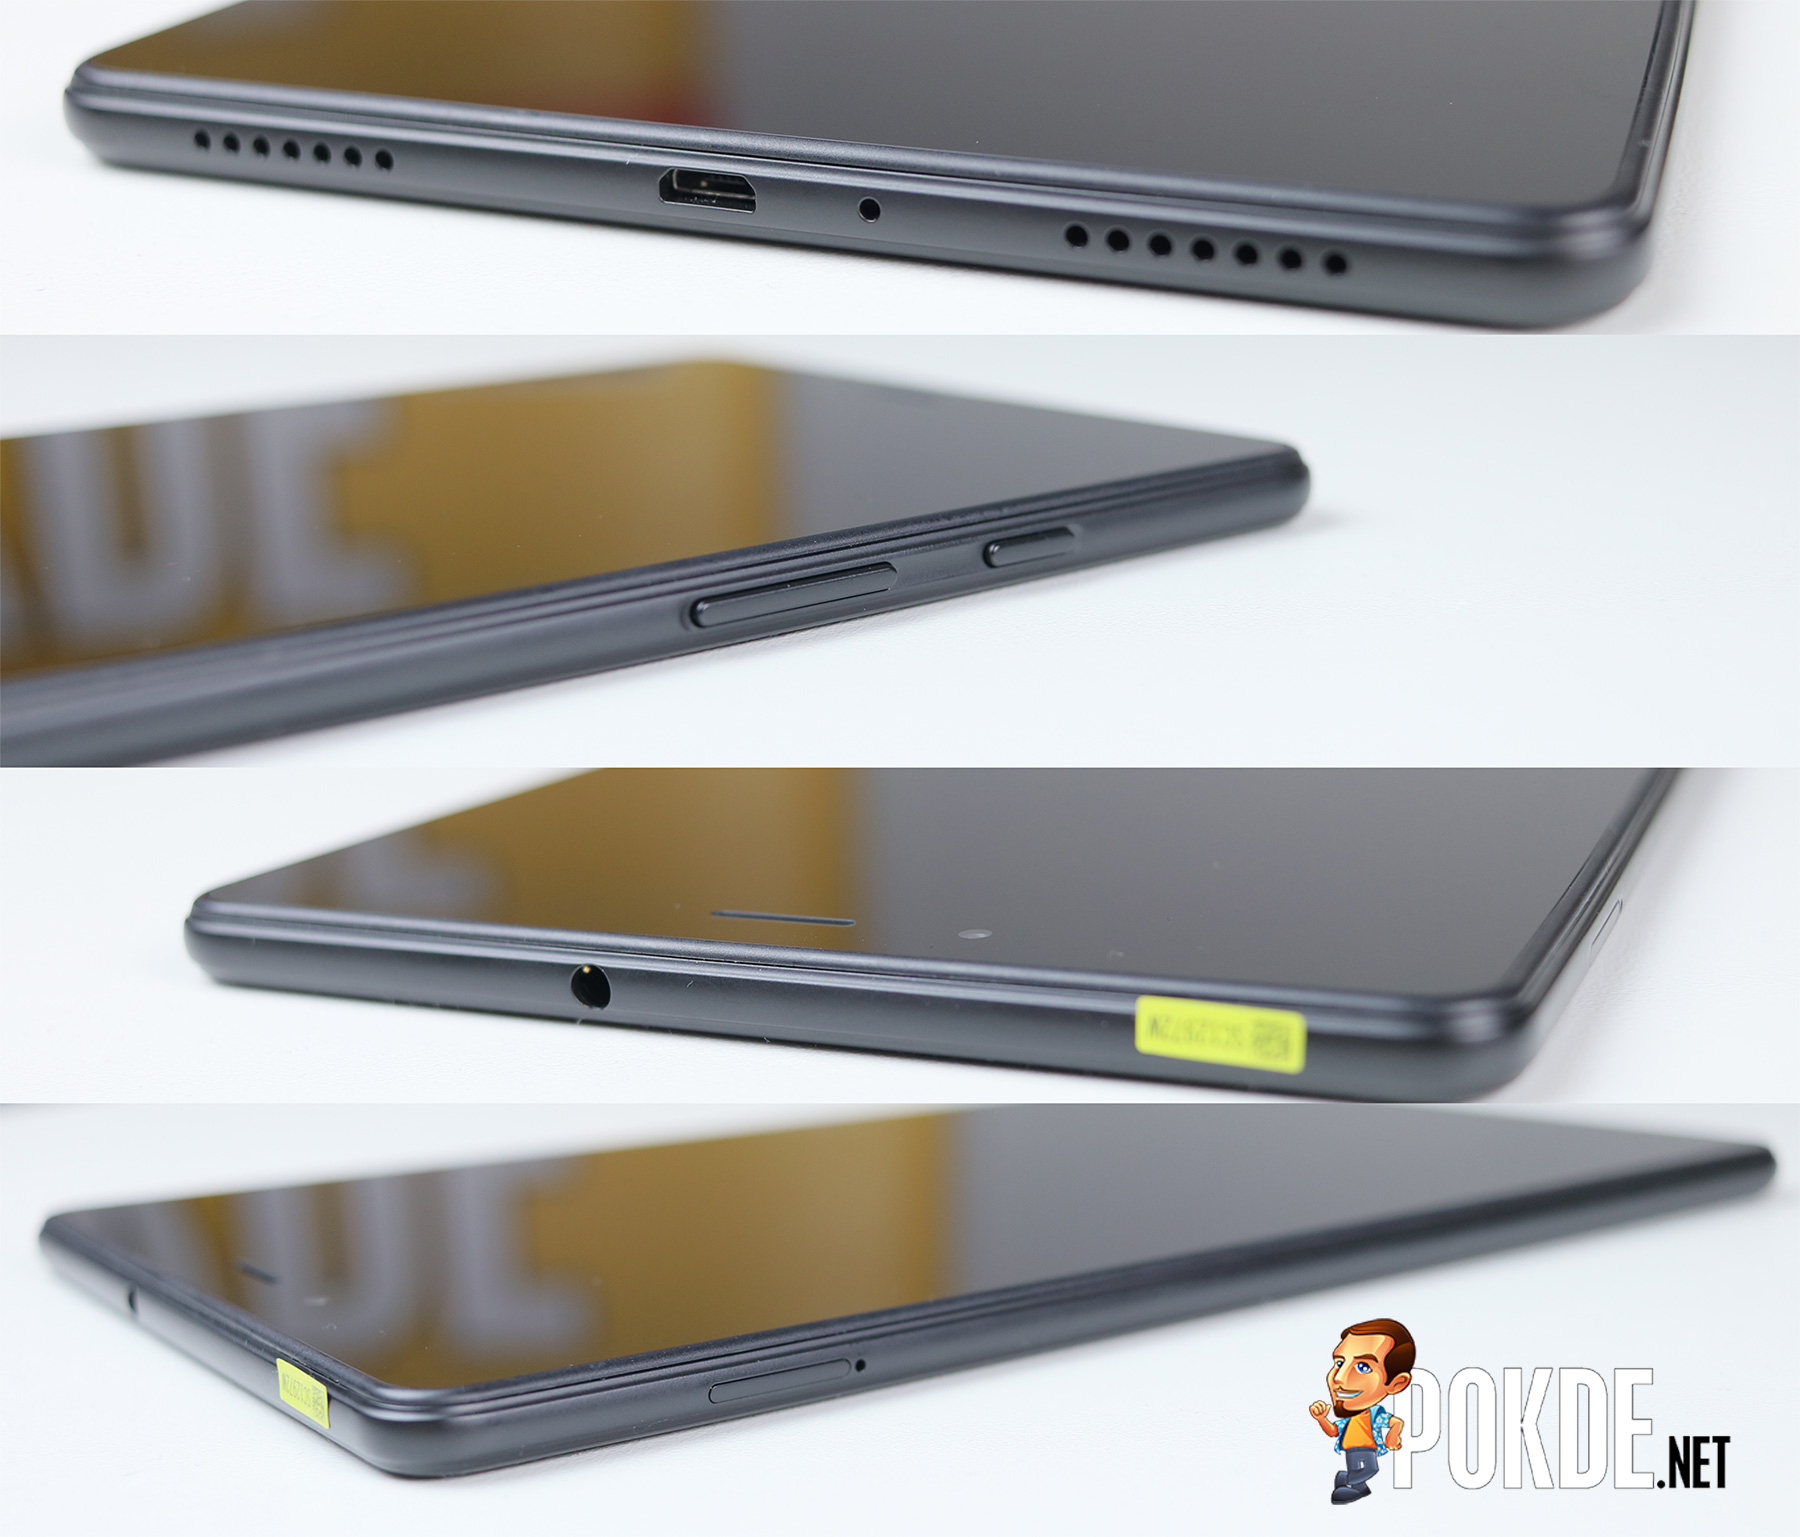 Samsung Galaxy Tab A 8.0 Review